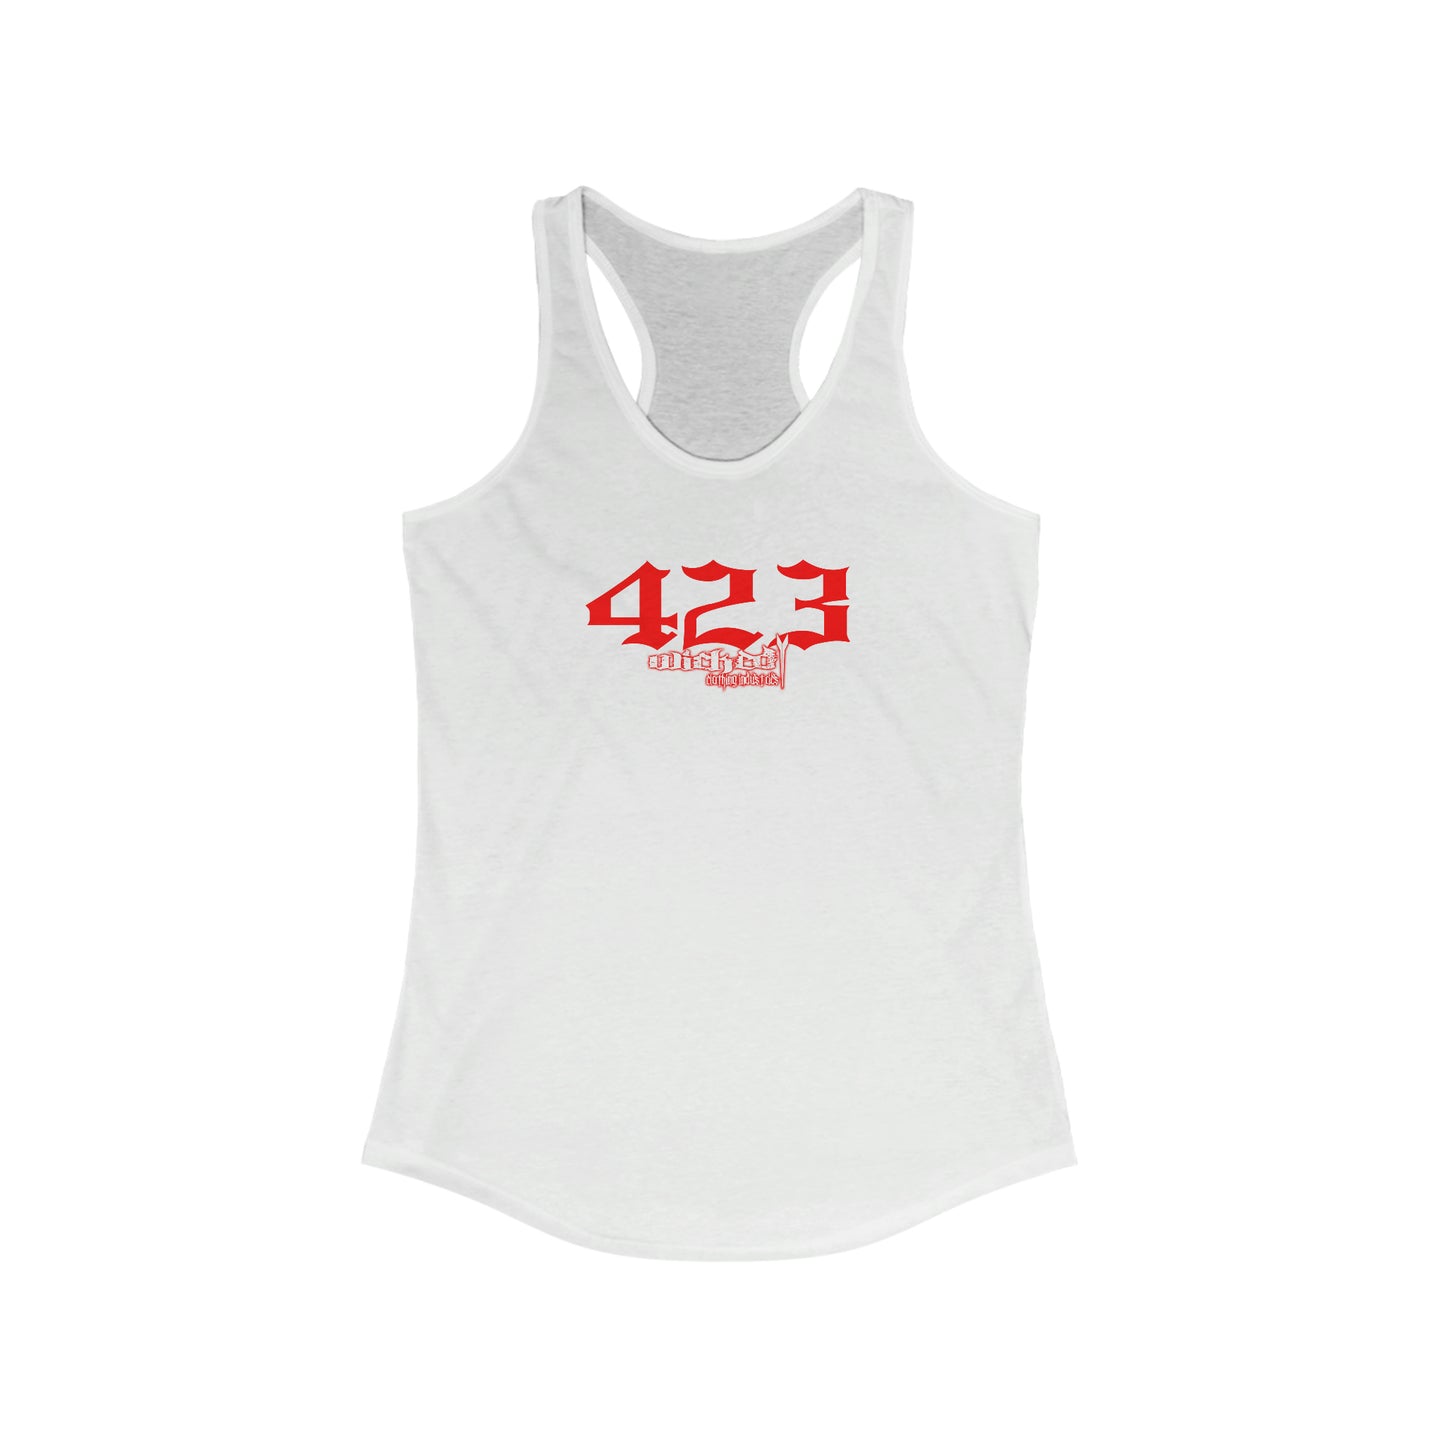 423 Red /Racerback Tank Top